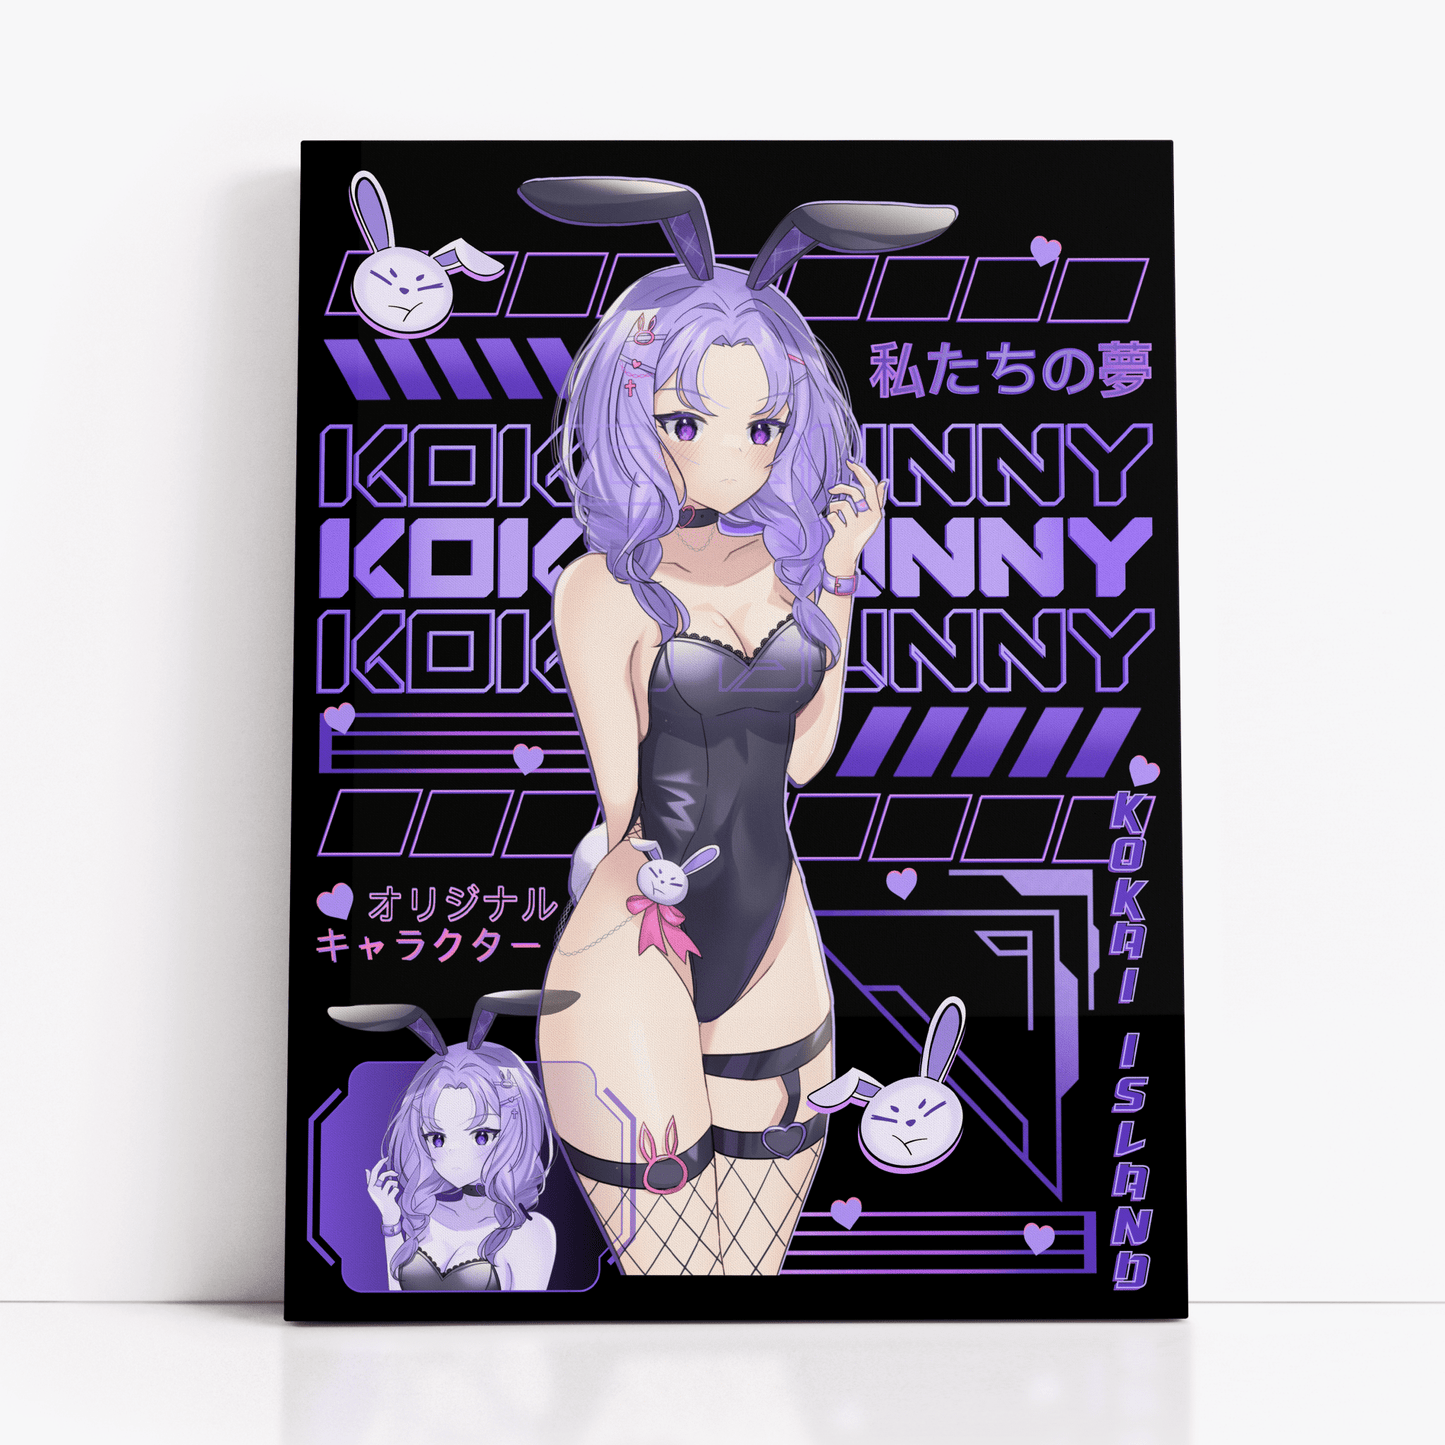 Koko Bunny - OC Collection PrintPrintKokai Island